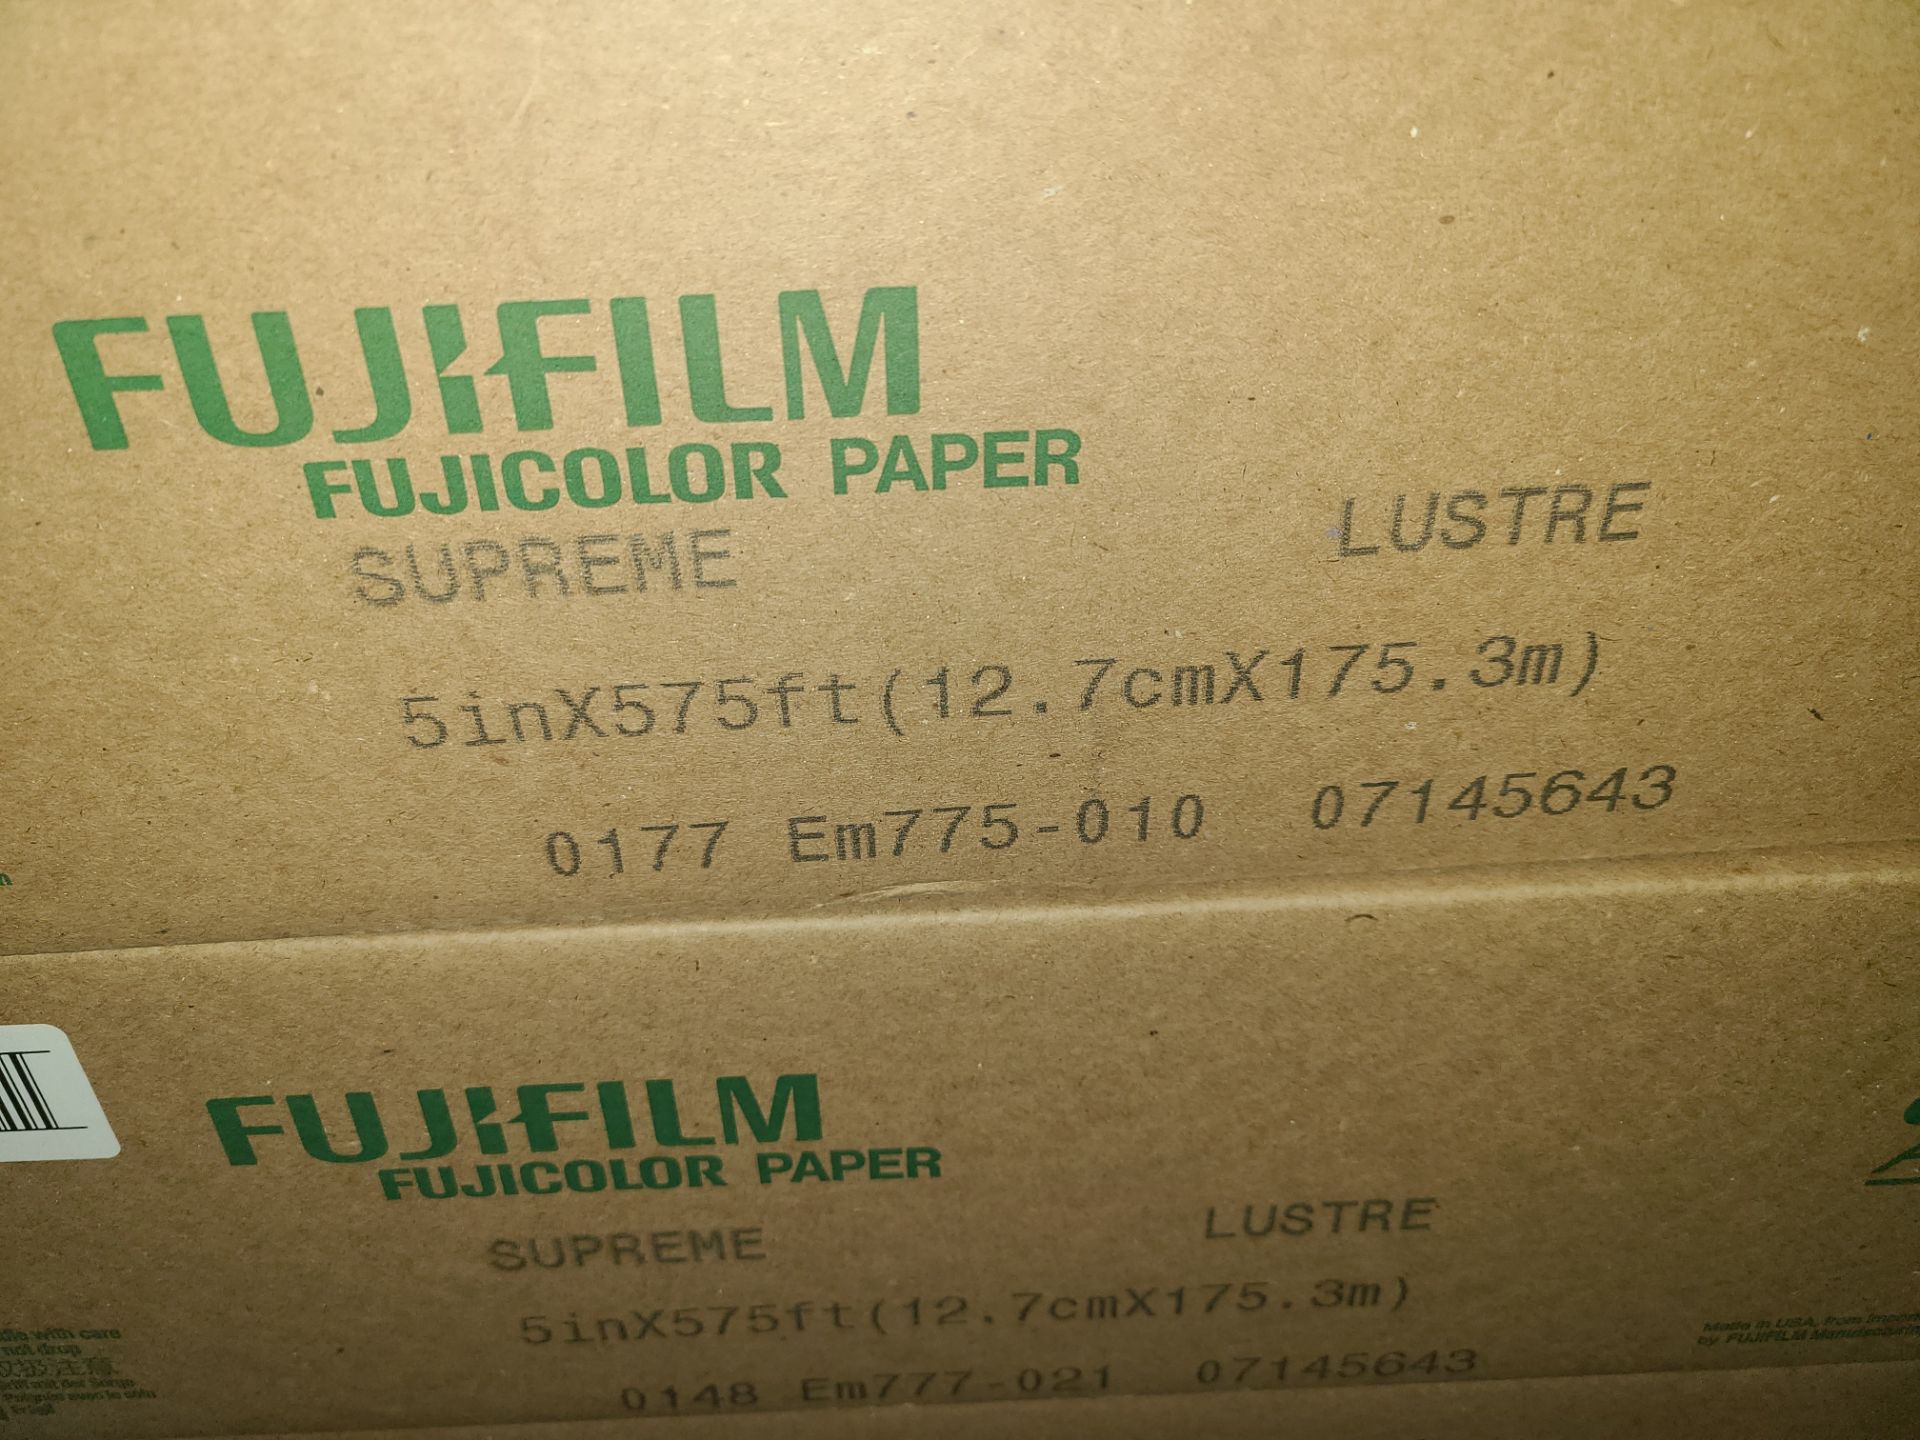 PALLET OF VARIOUS FUJIFILM PRODUCTS: (4) FUJIFILM FUJICOLOR PAPER 5"X575' SUPREME LUSTER; (6) - Image 4 of 5